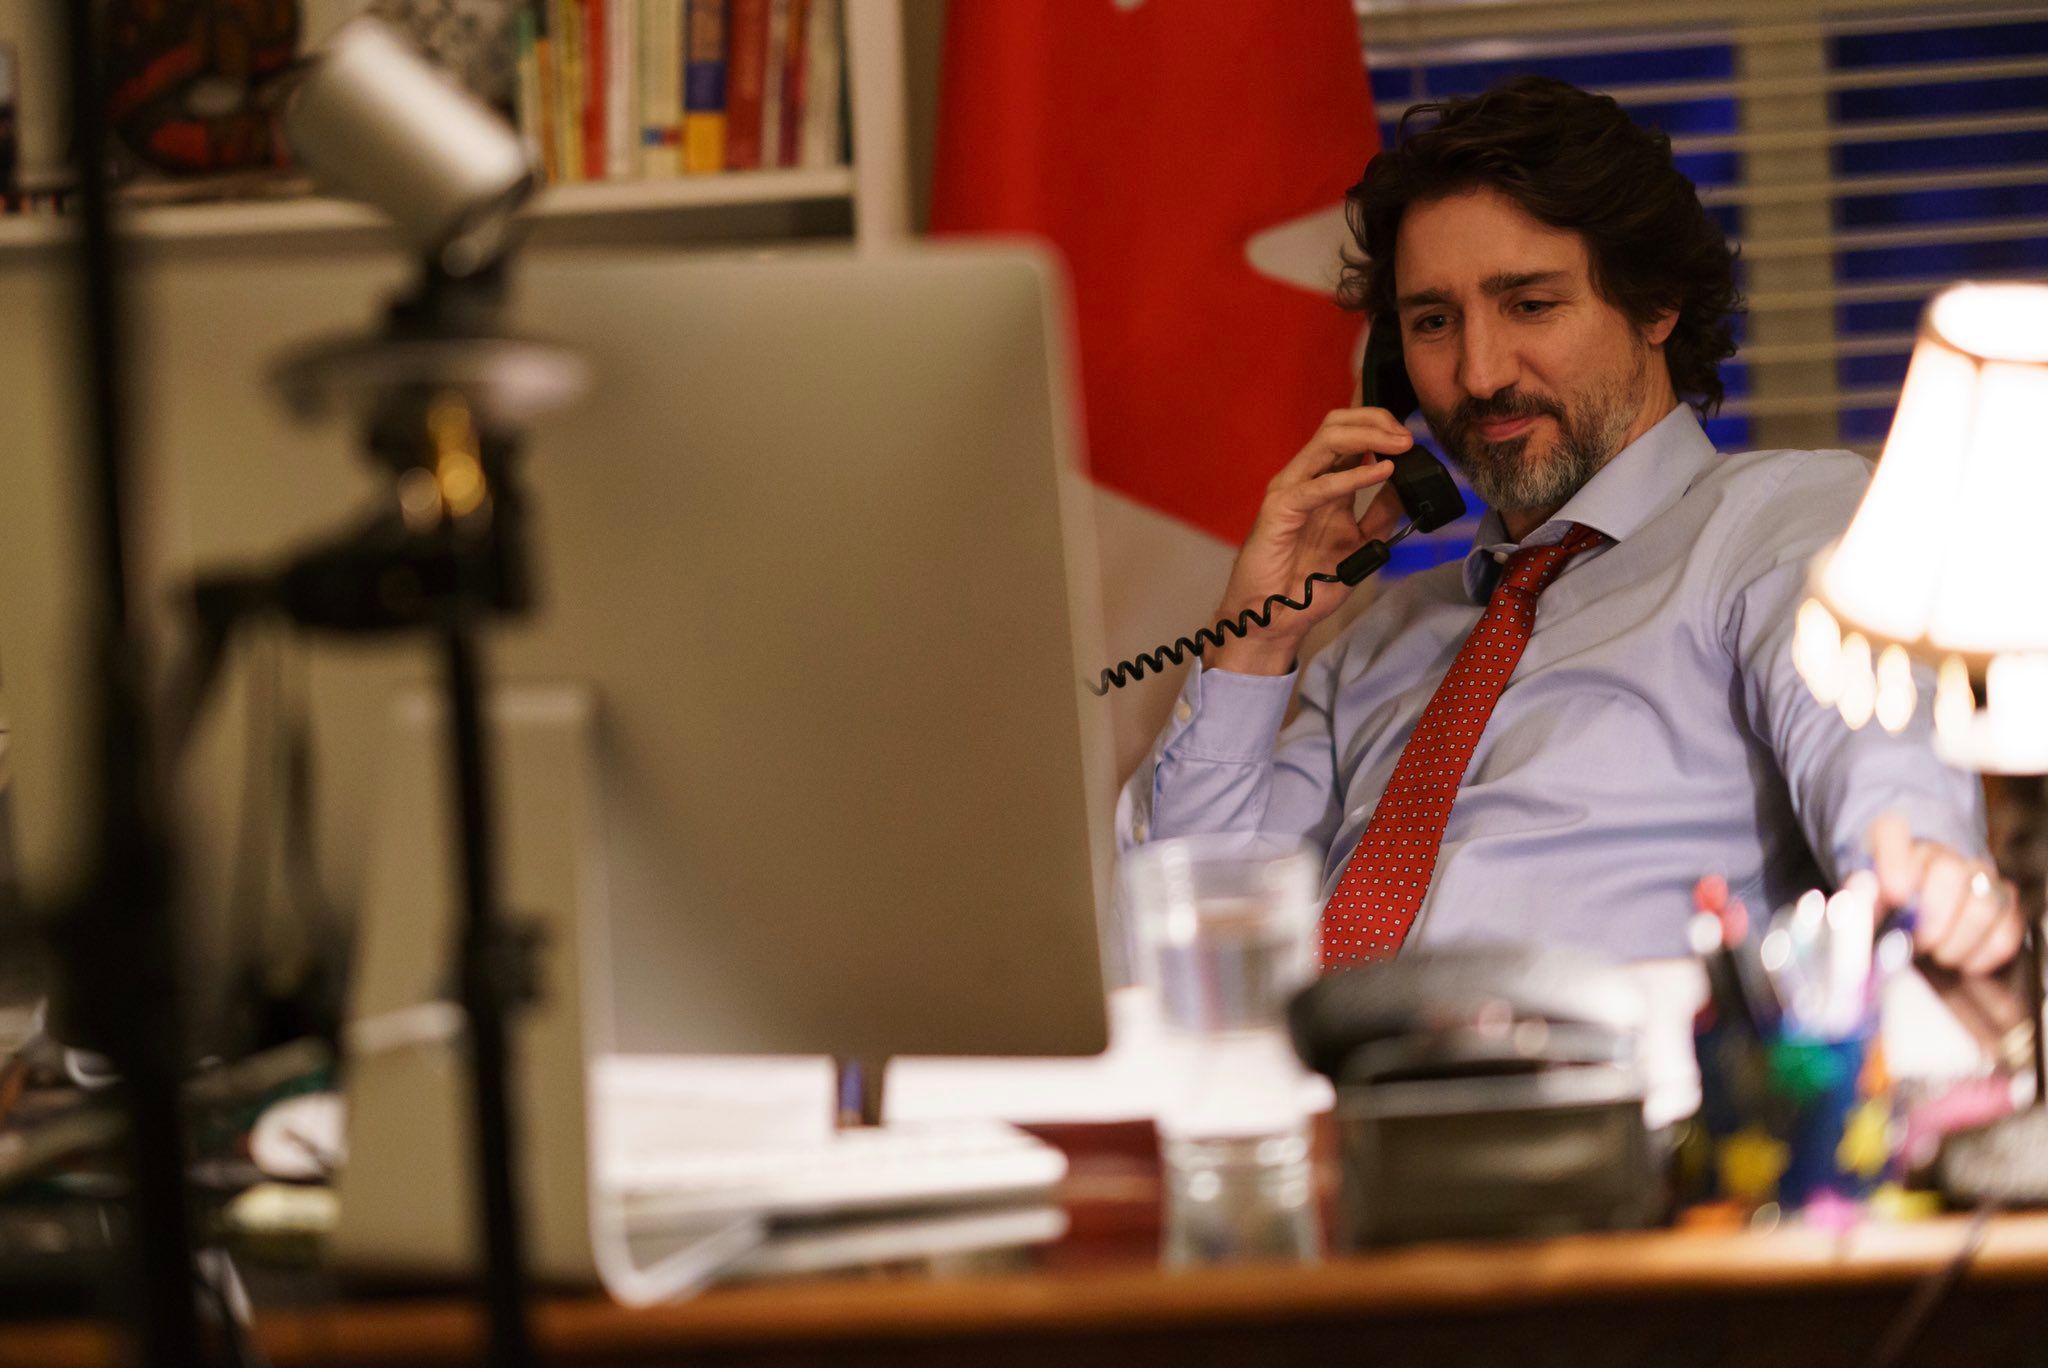 Justin Trudeau, Joe Biden to meet next month: Canada